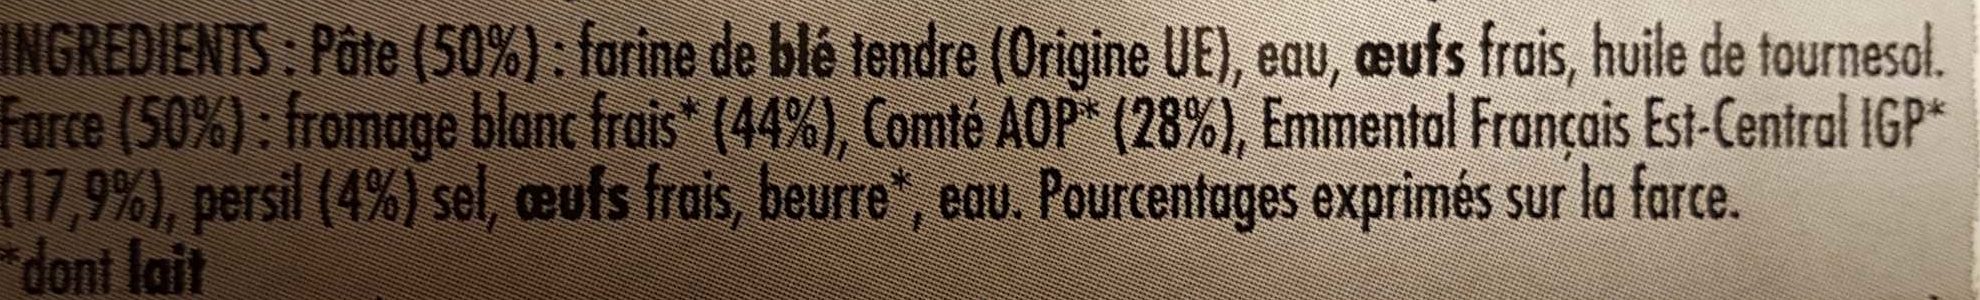 Ravioles du dauphiné label rouge igp - Ingredients - fr